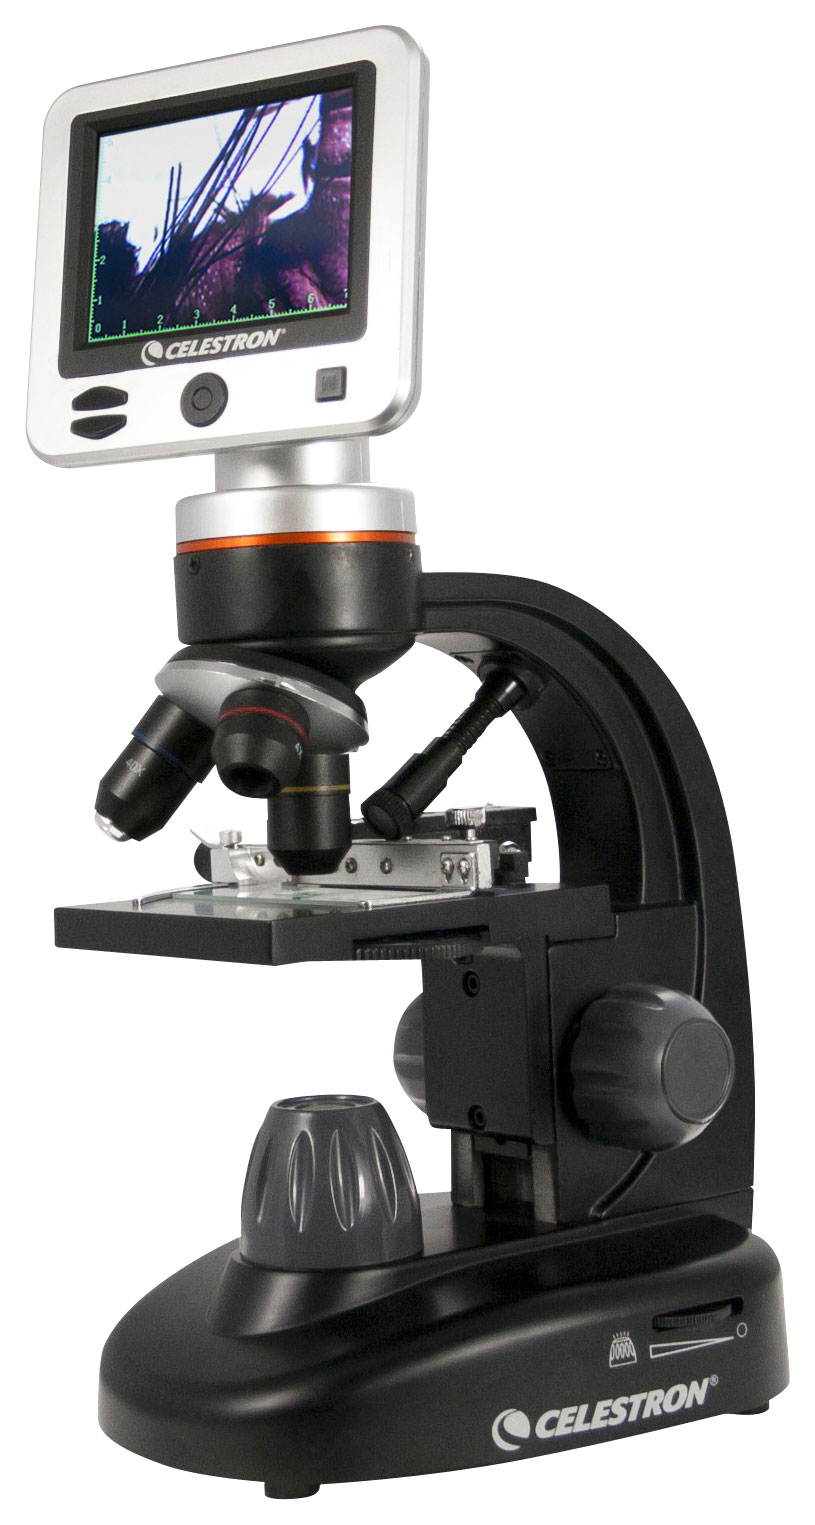 Angle View: Celestron 44341 LCD Digital Microscope II (Black)